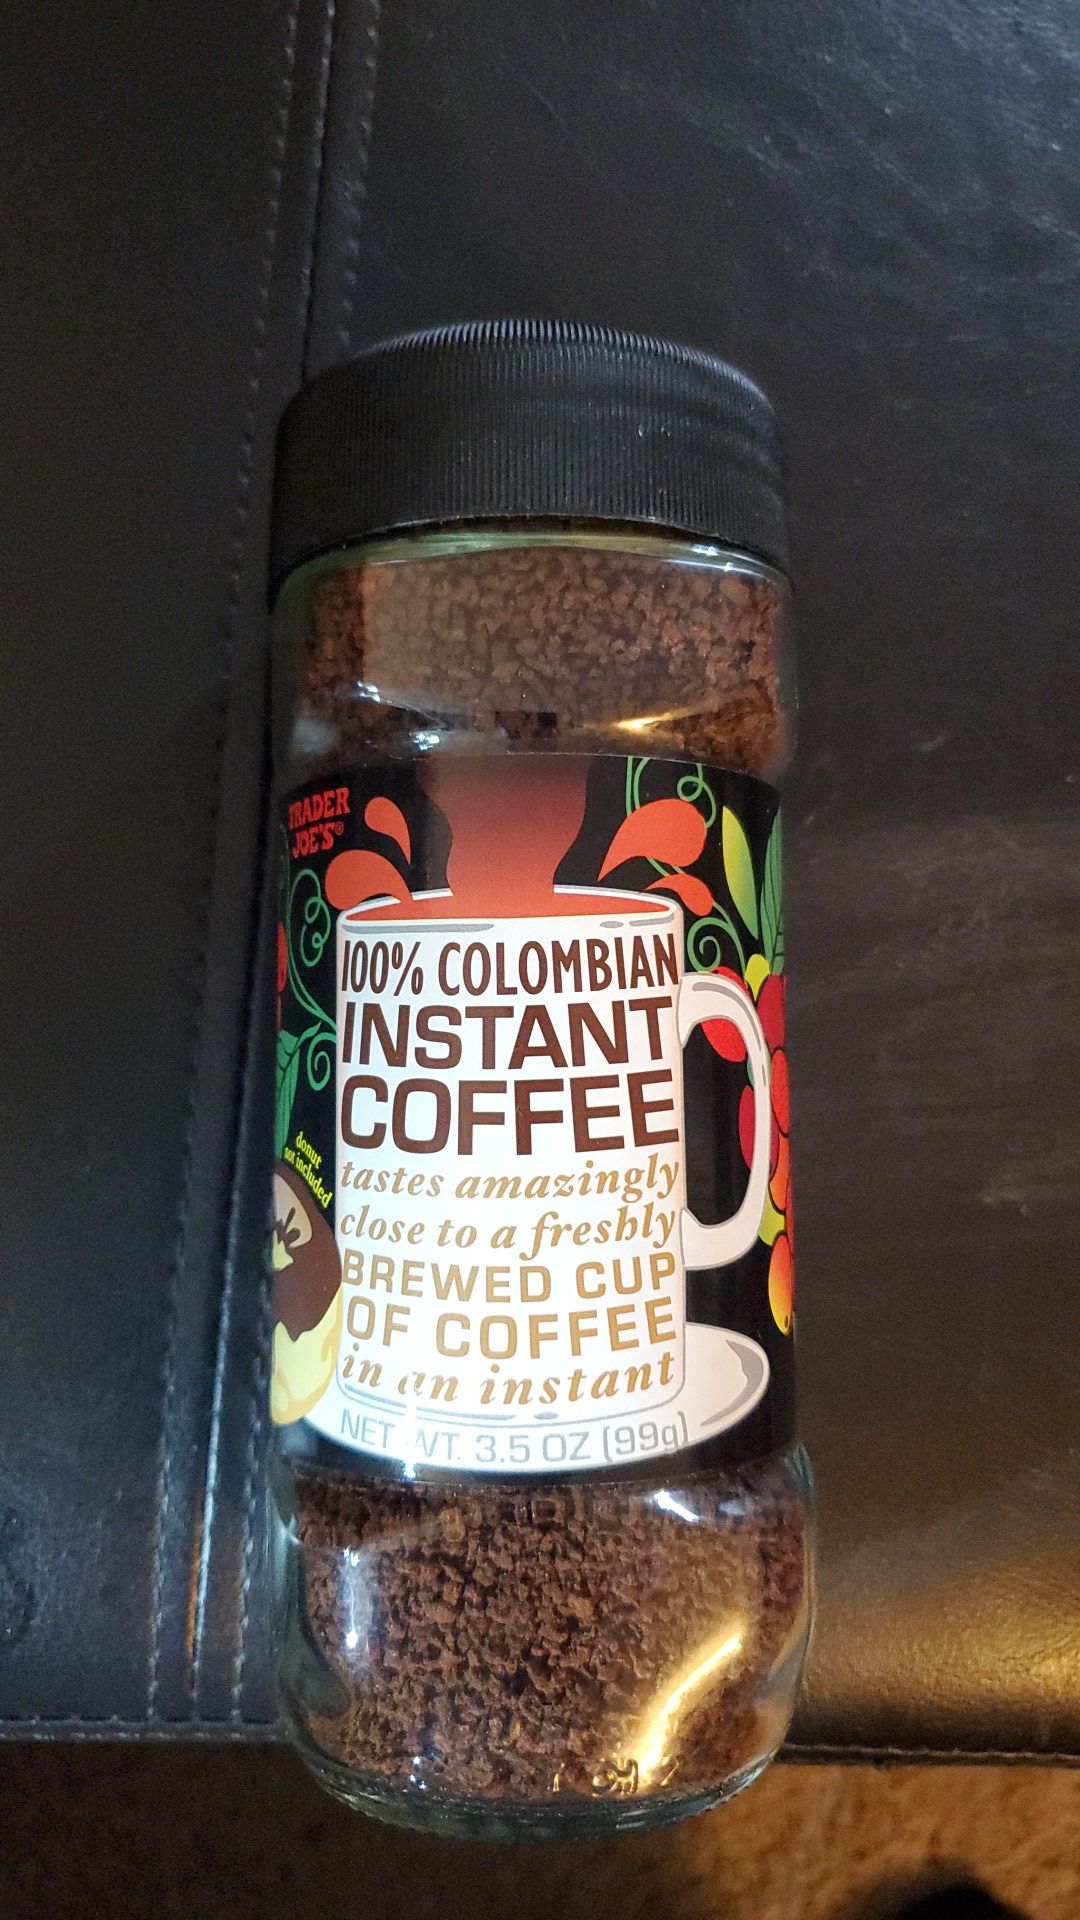 Trader Joe's 100% Colombian instant coffee 13.5 Oz jar expiration 2021 $4